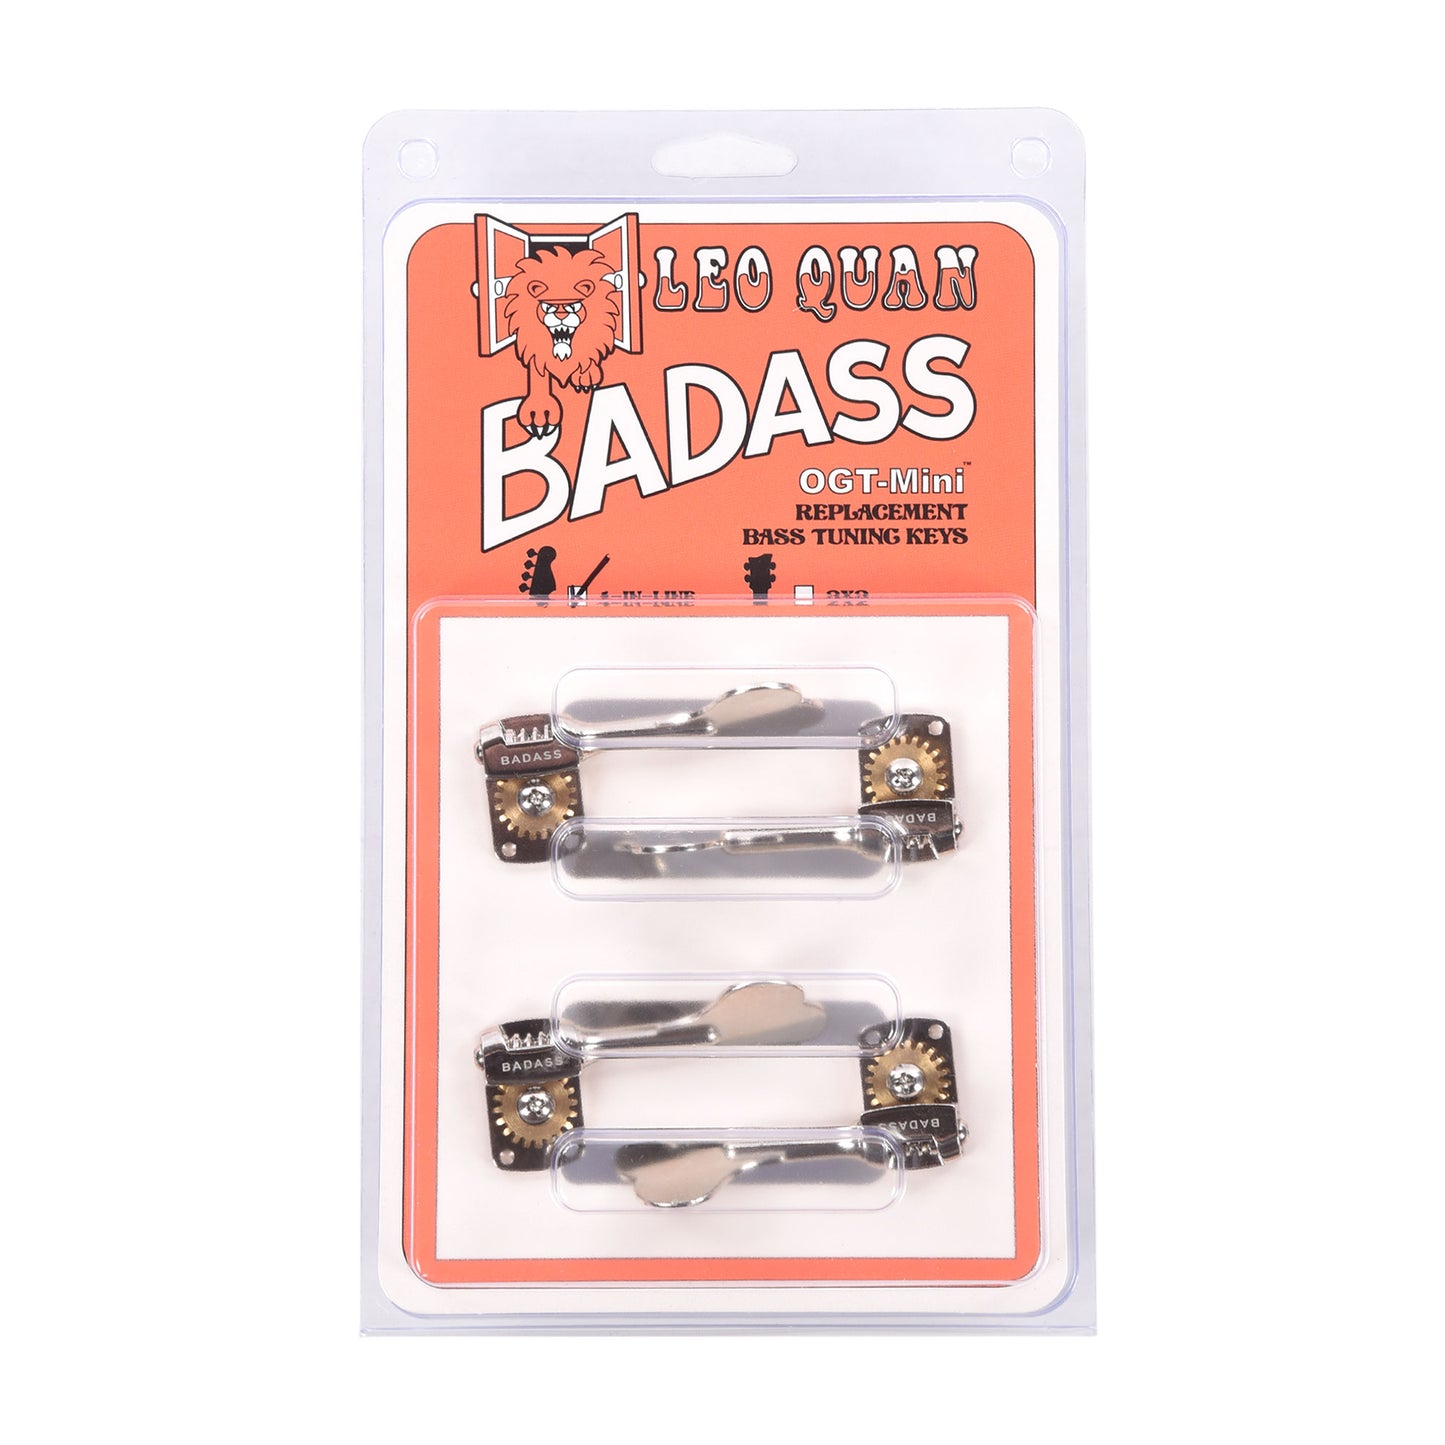 Leon Quan Badass OGT Mini Bass Keys Open Gear Large Post 4-In-Line Set Nickel